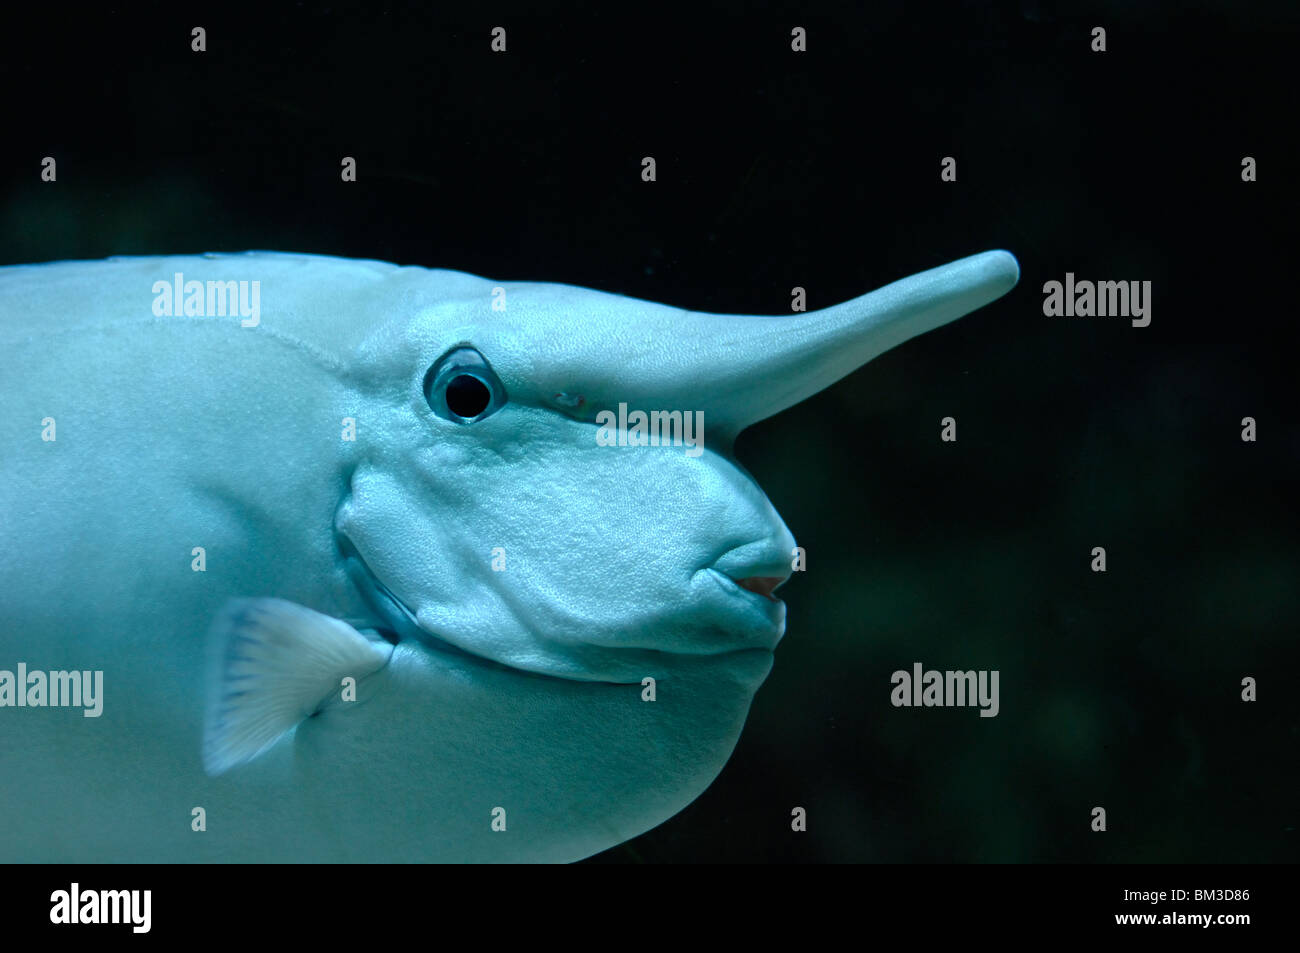 Pesce Naso Lungo Immagini e Fotos Stock - Alamy